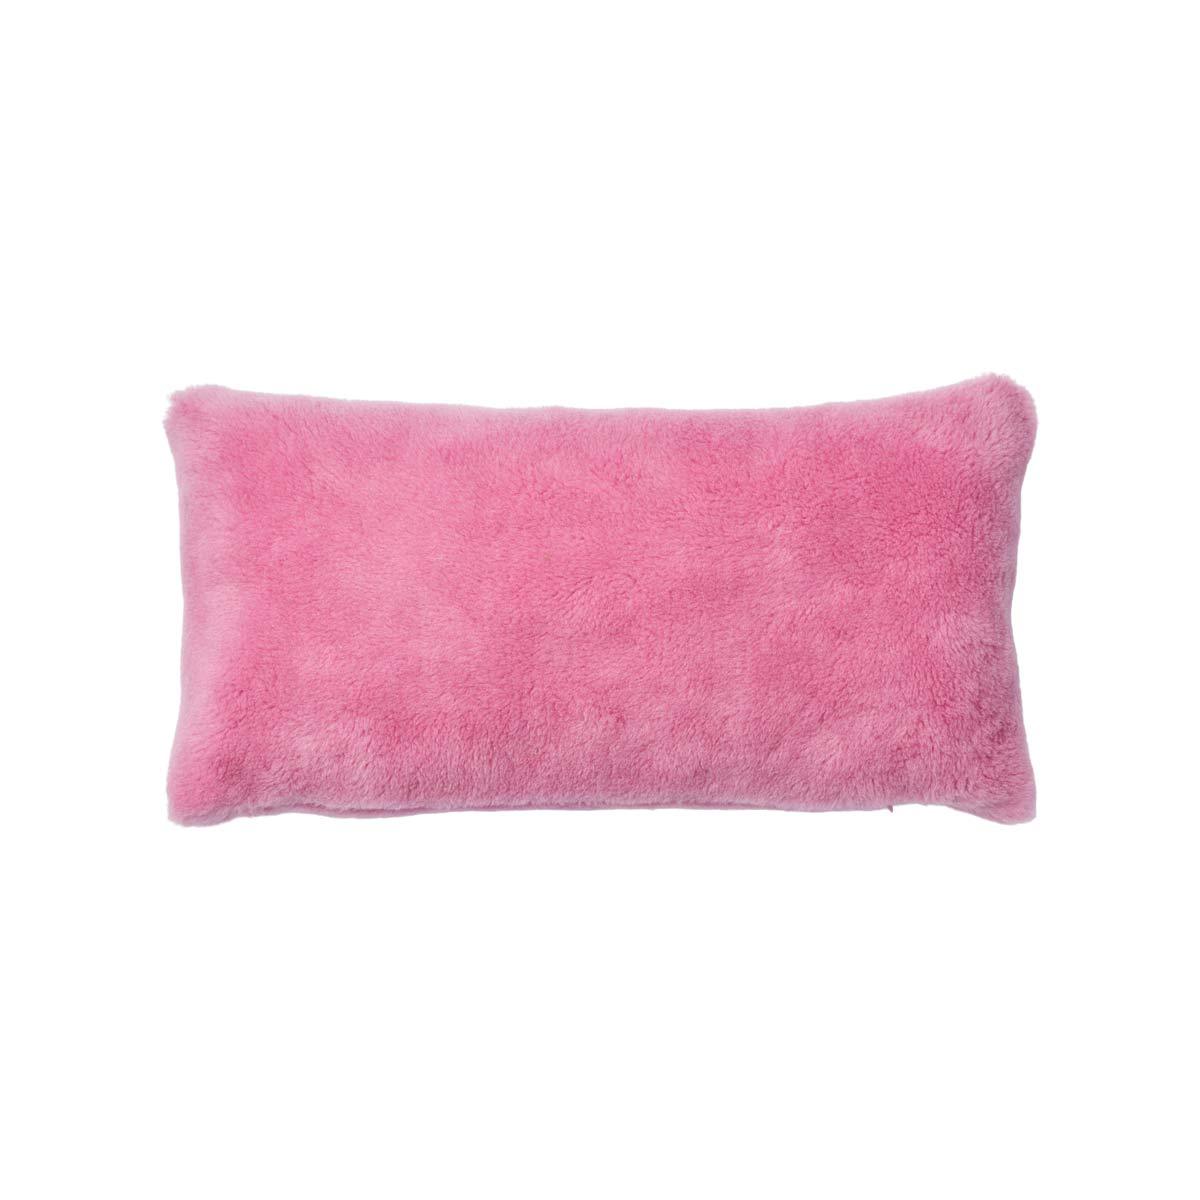 Cushion of New Zealand Lambskin wool | 28x56 cm.